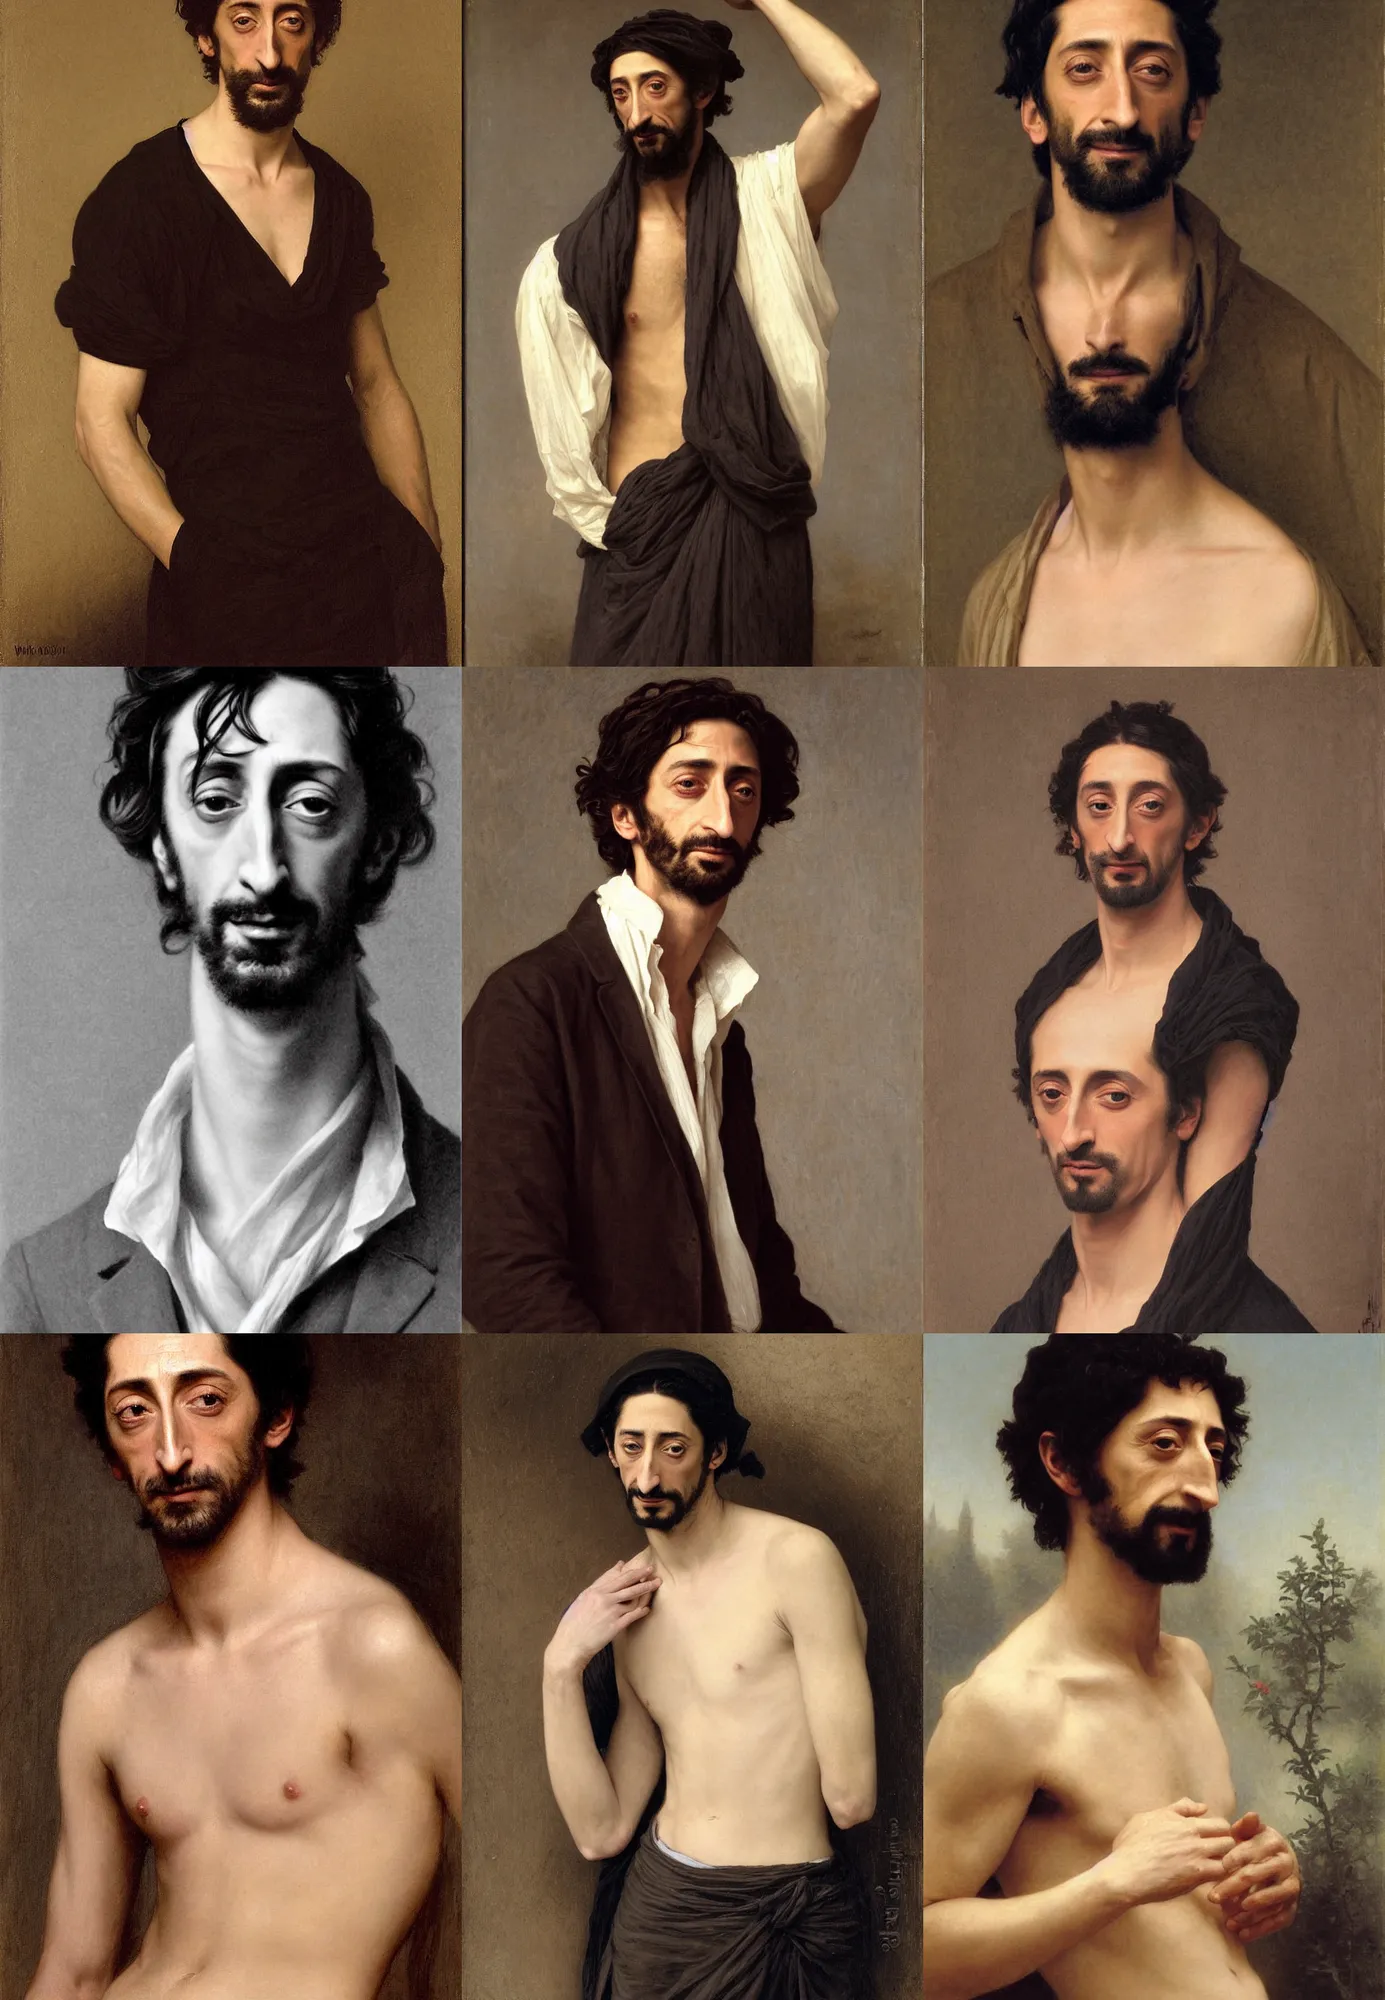 Prompt: portrait of adrien brody by william bouguereau